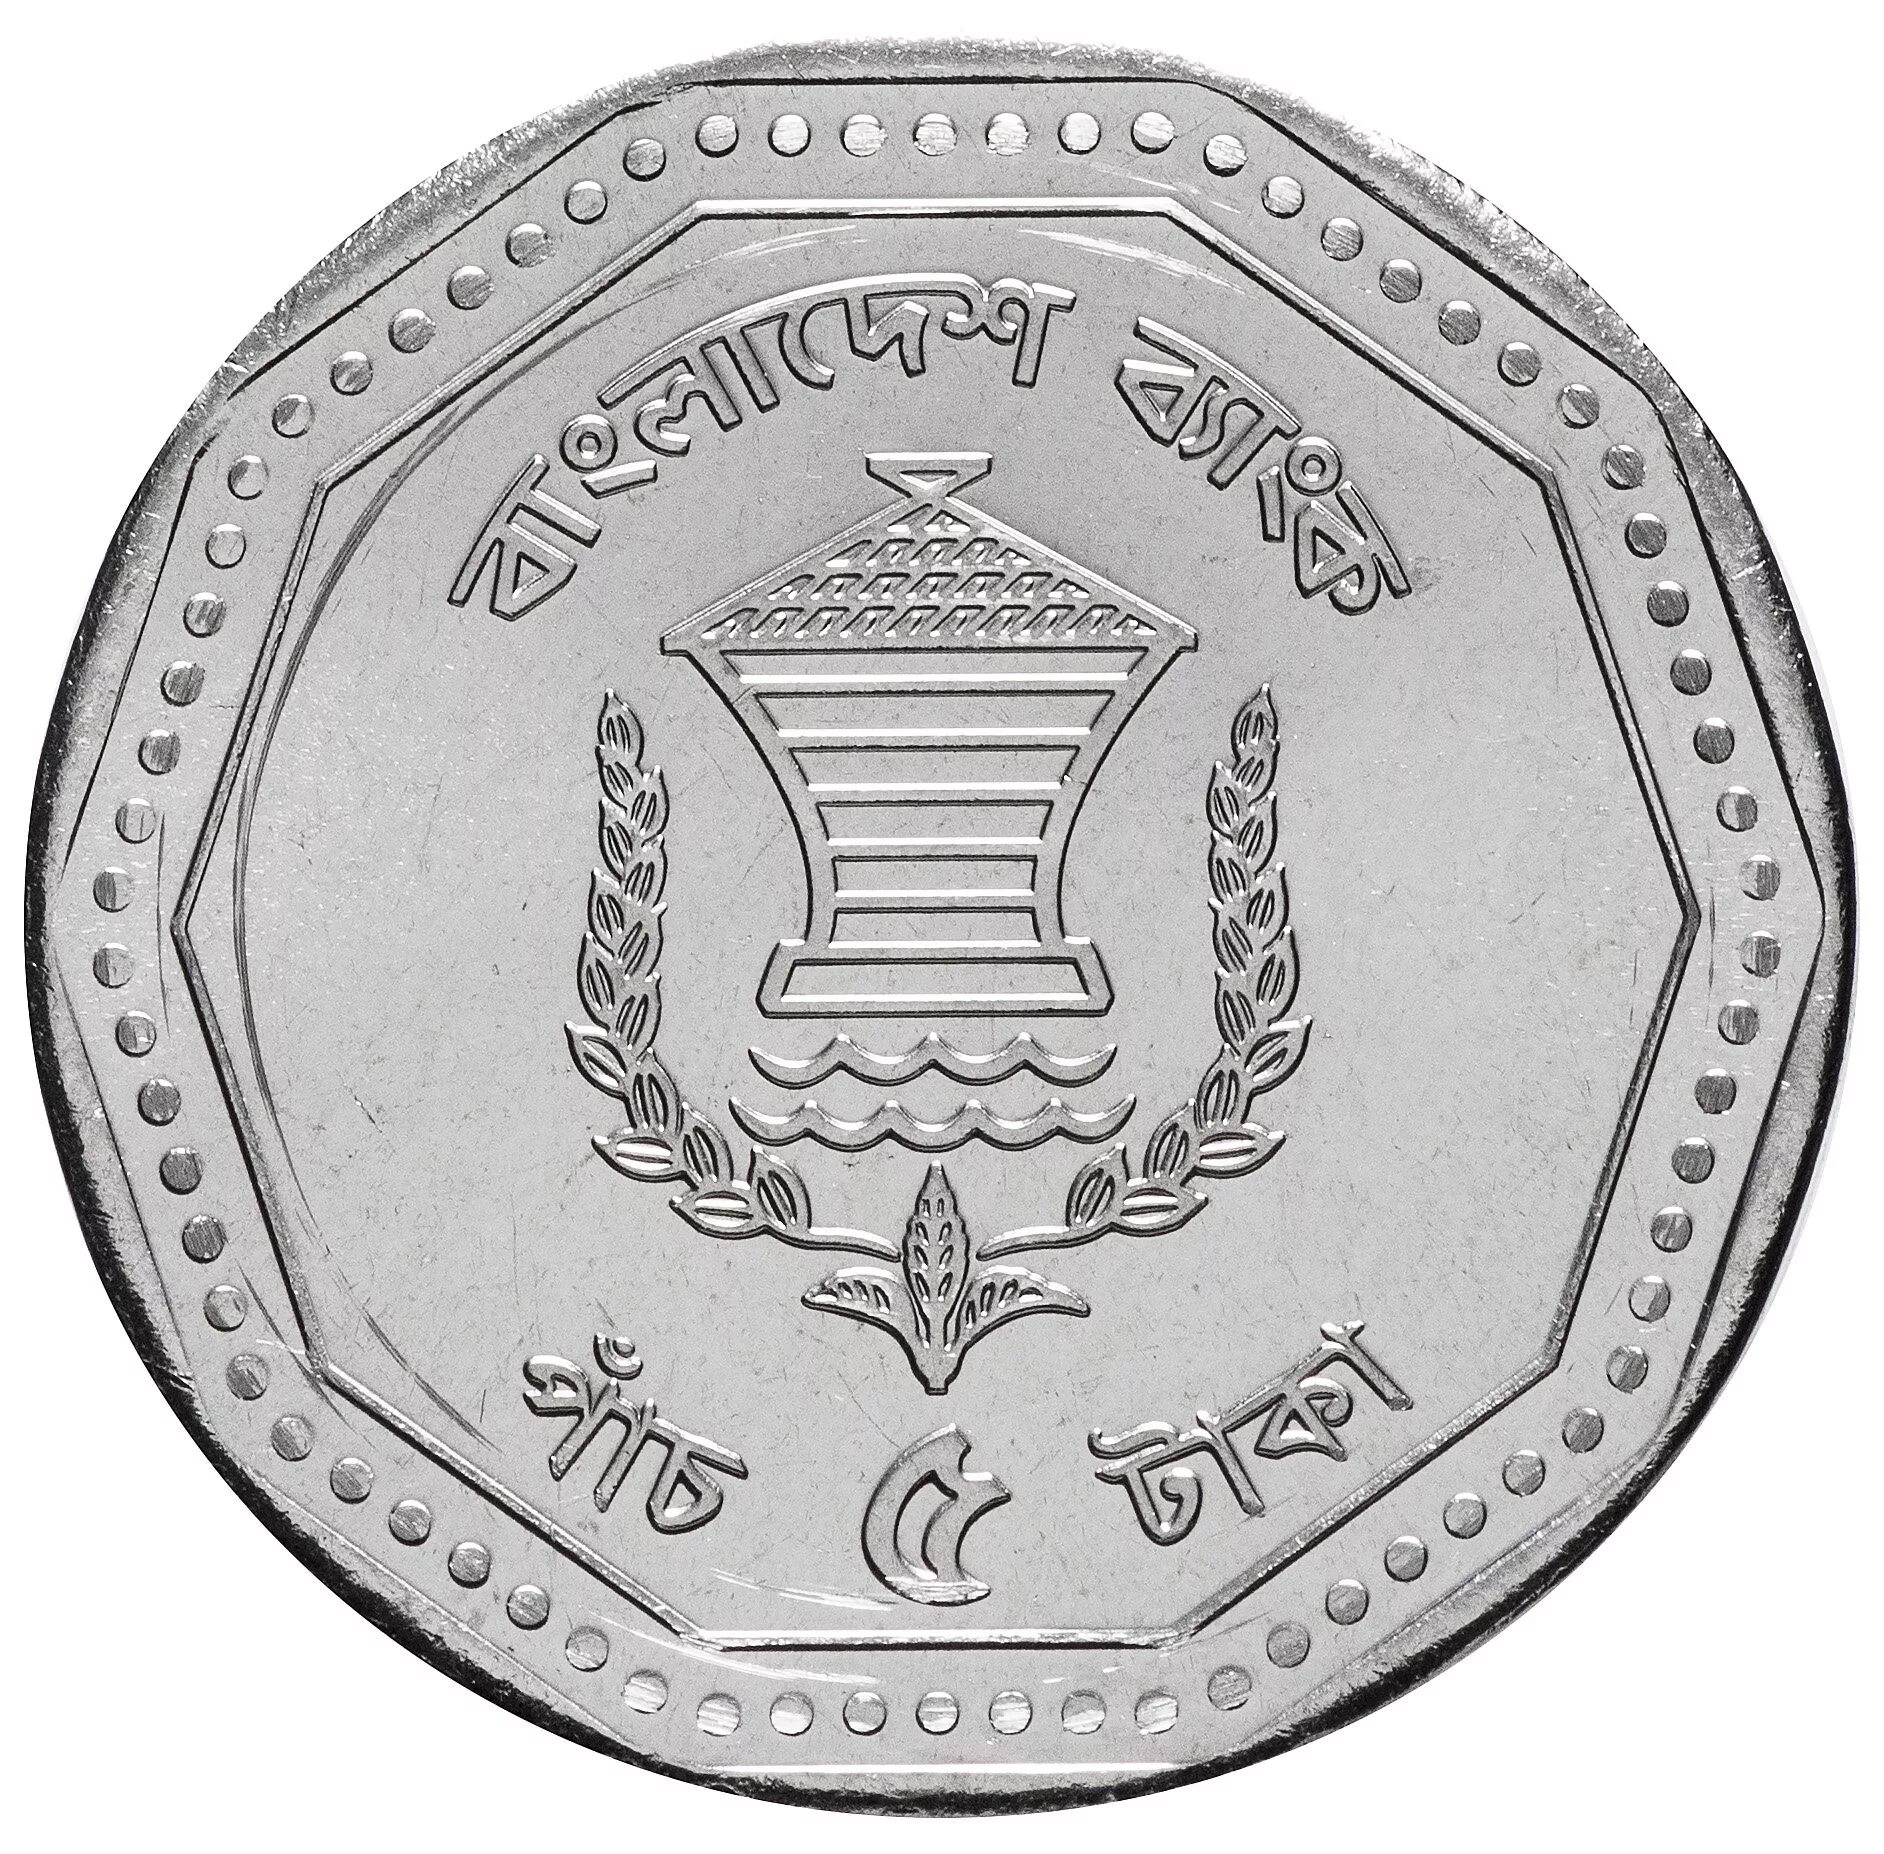 5 така. Монета Бангладеш 5 так. Така монета. Бангладеш Файв така.